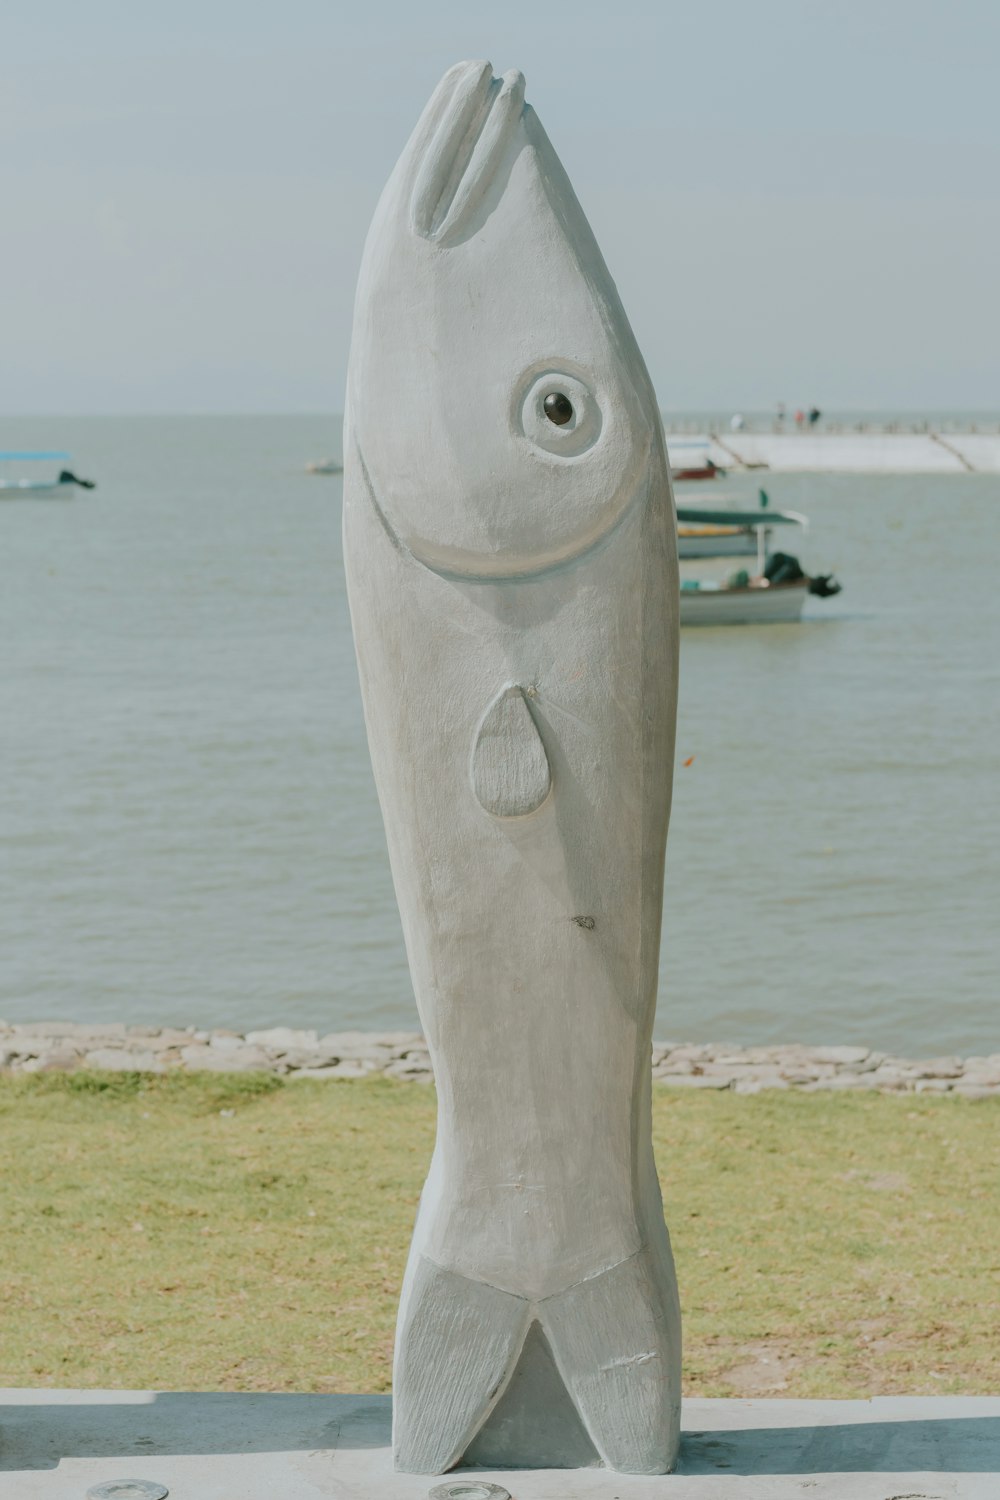 a sculpture of a fish on a beach